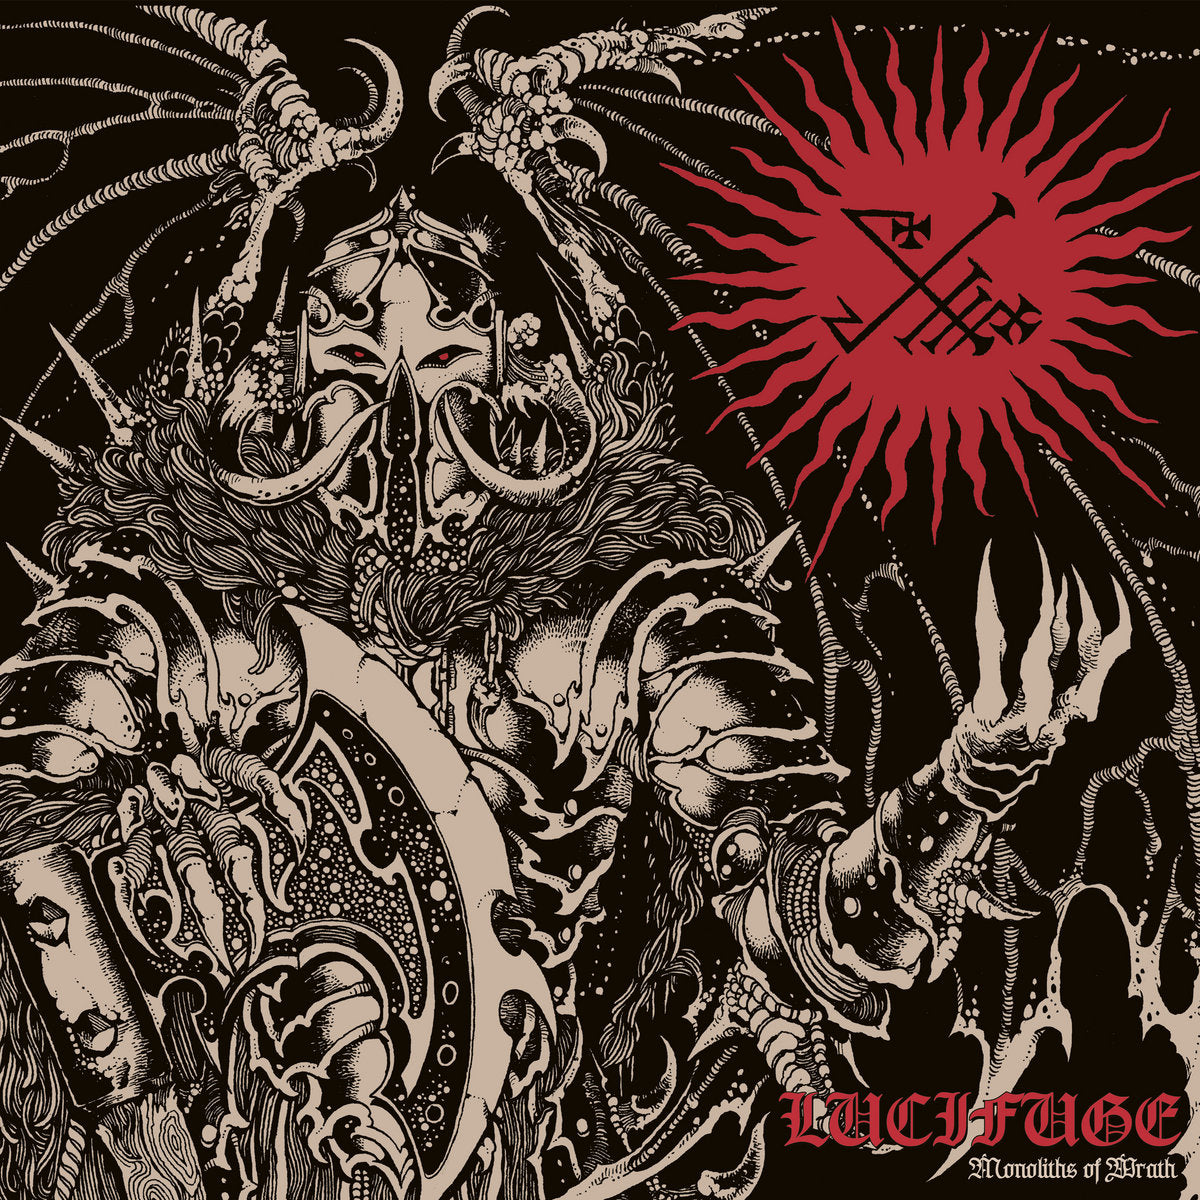 Lucifuge - Monoliths of Wrath CD